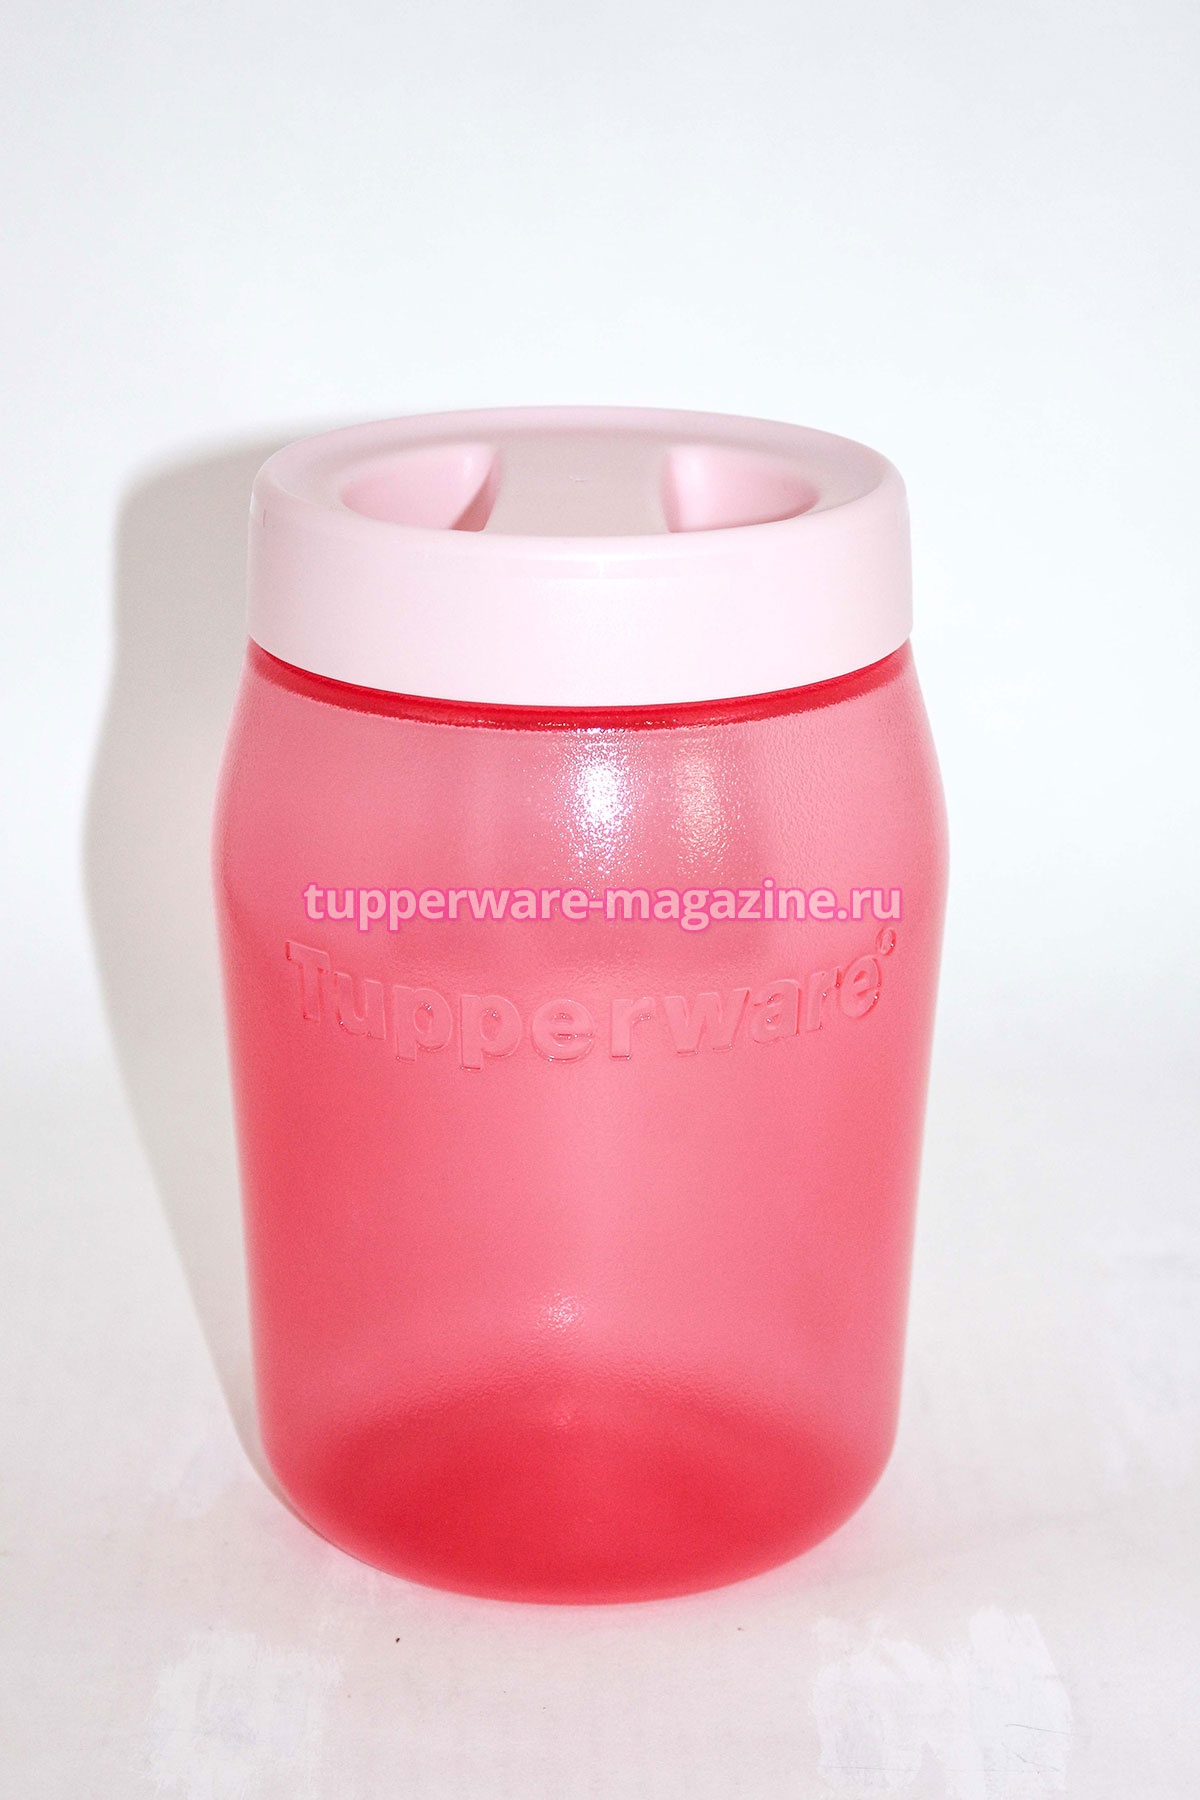 Чудо-банка Tupperware 1,5 л в розовом цвете